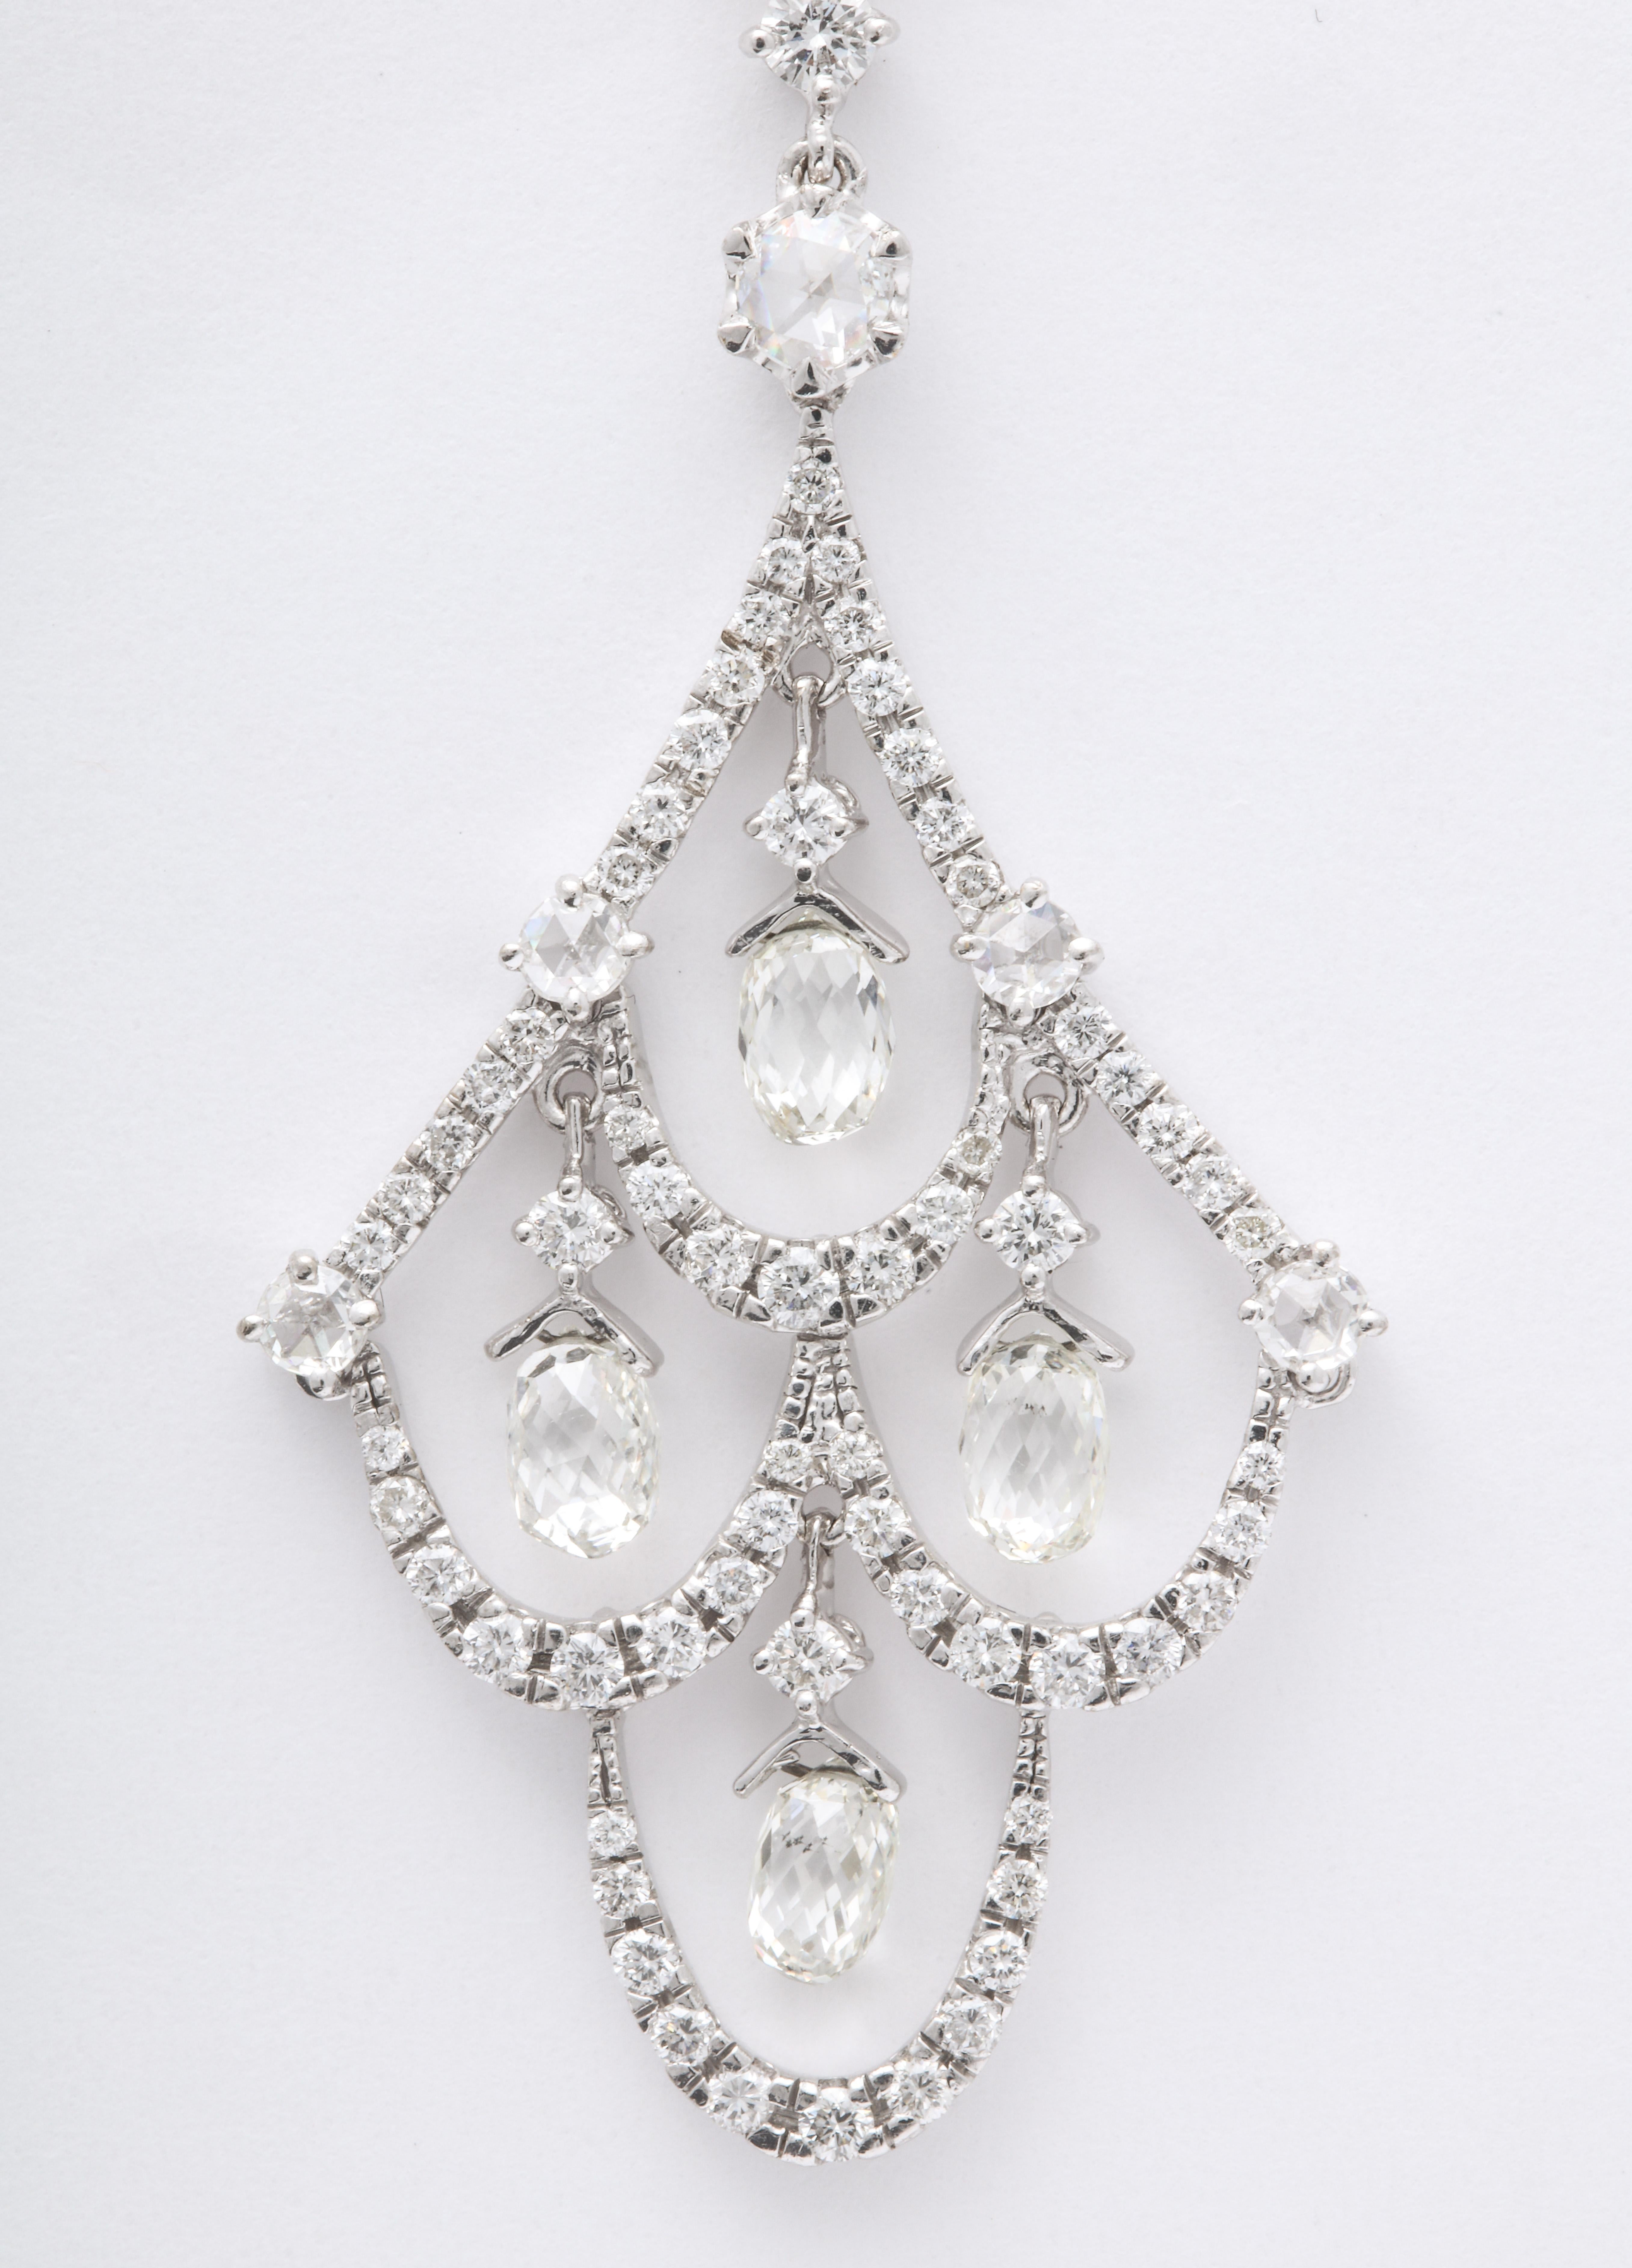 Romantic White Gold, Diamond and Diamond Briolette Chandelier Earrings For Sale